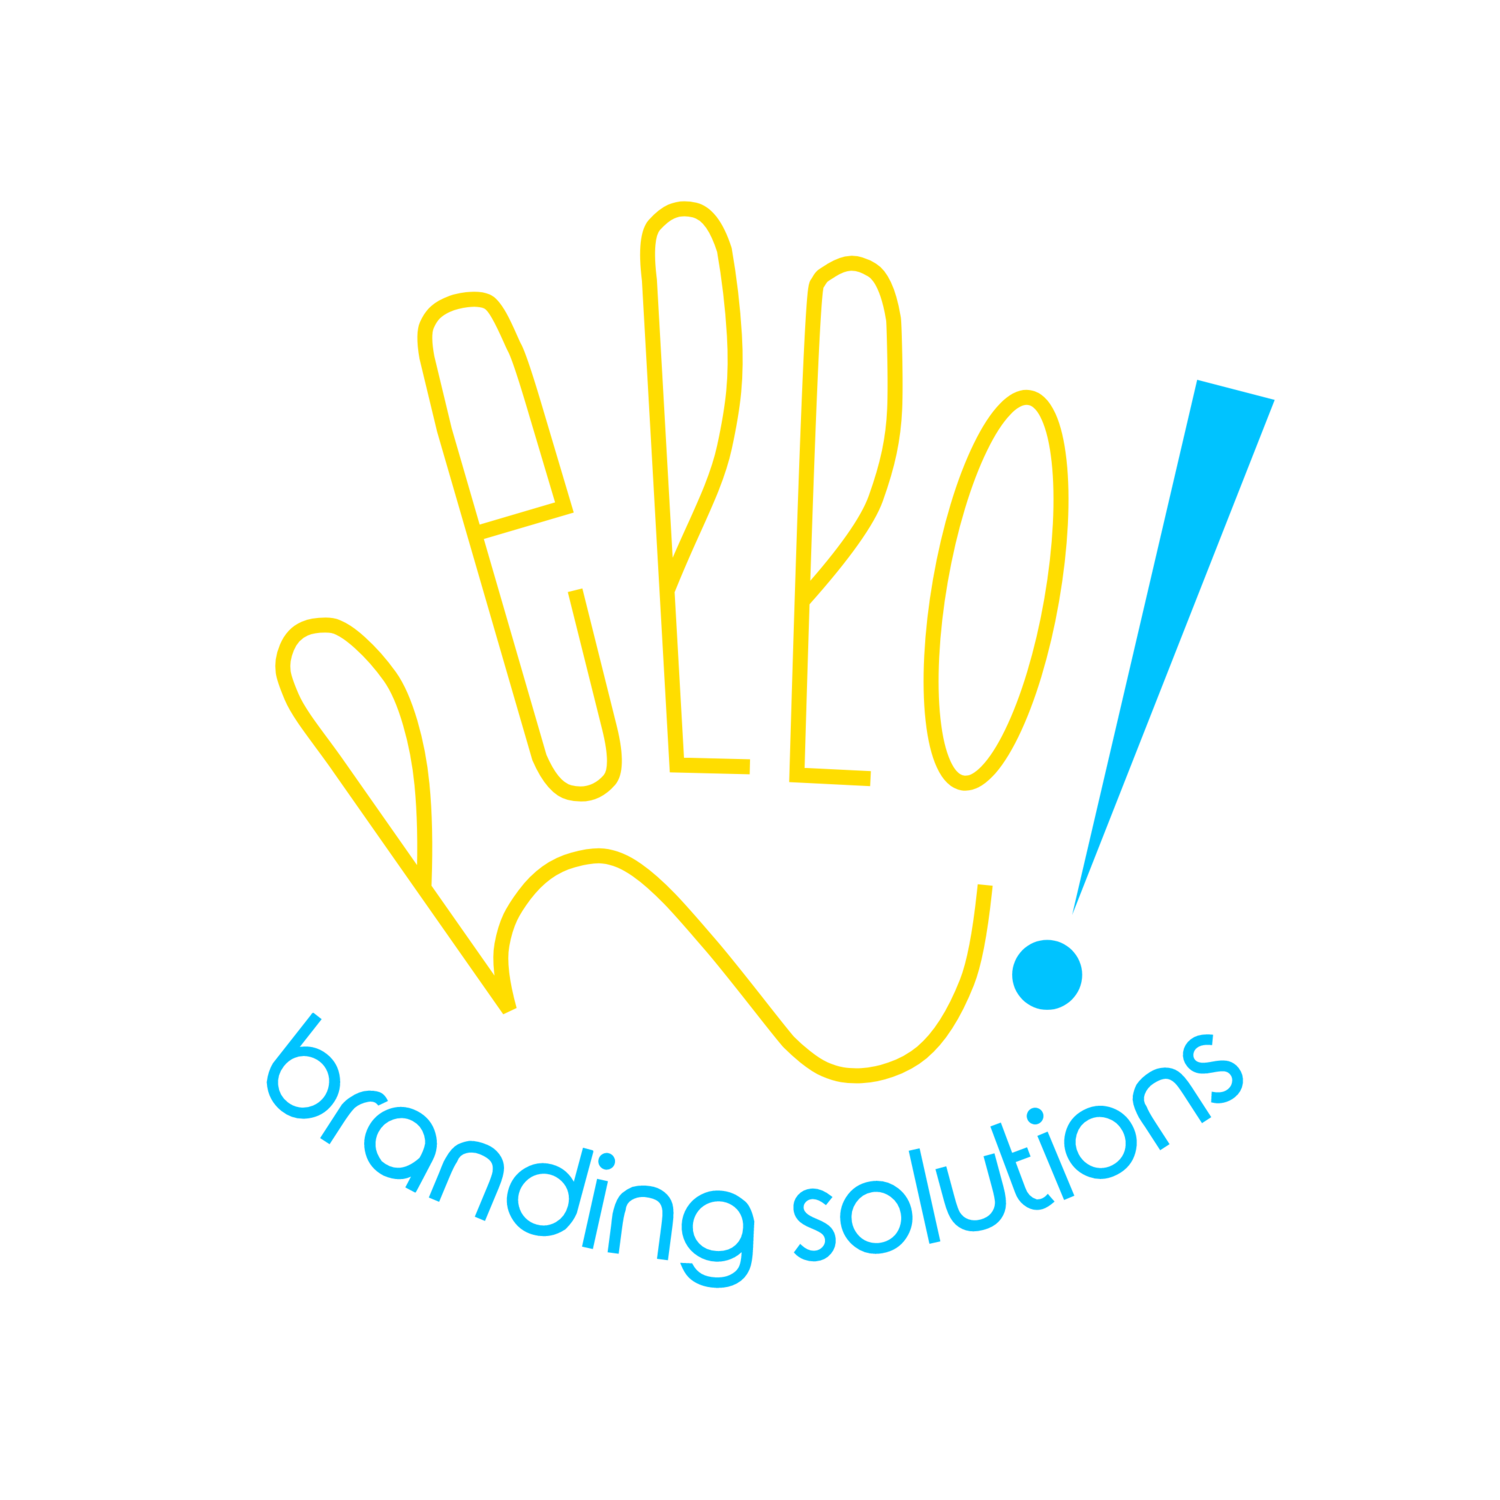 Hello Branding Solutions